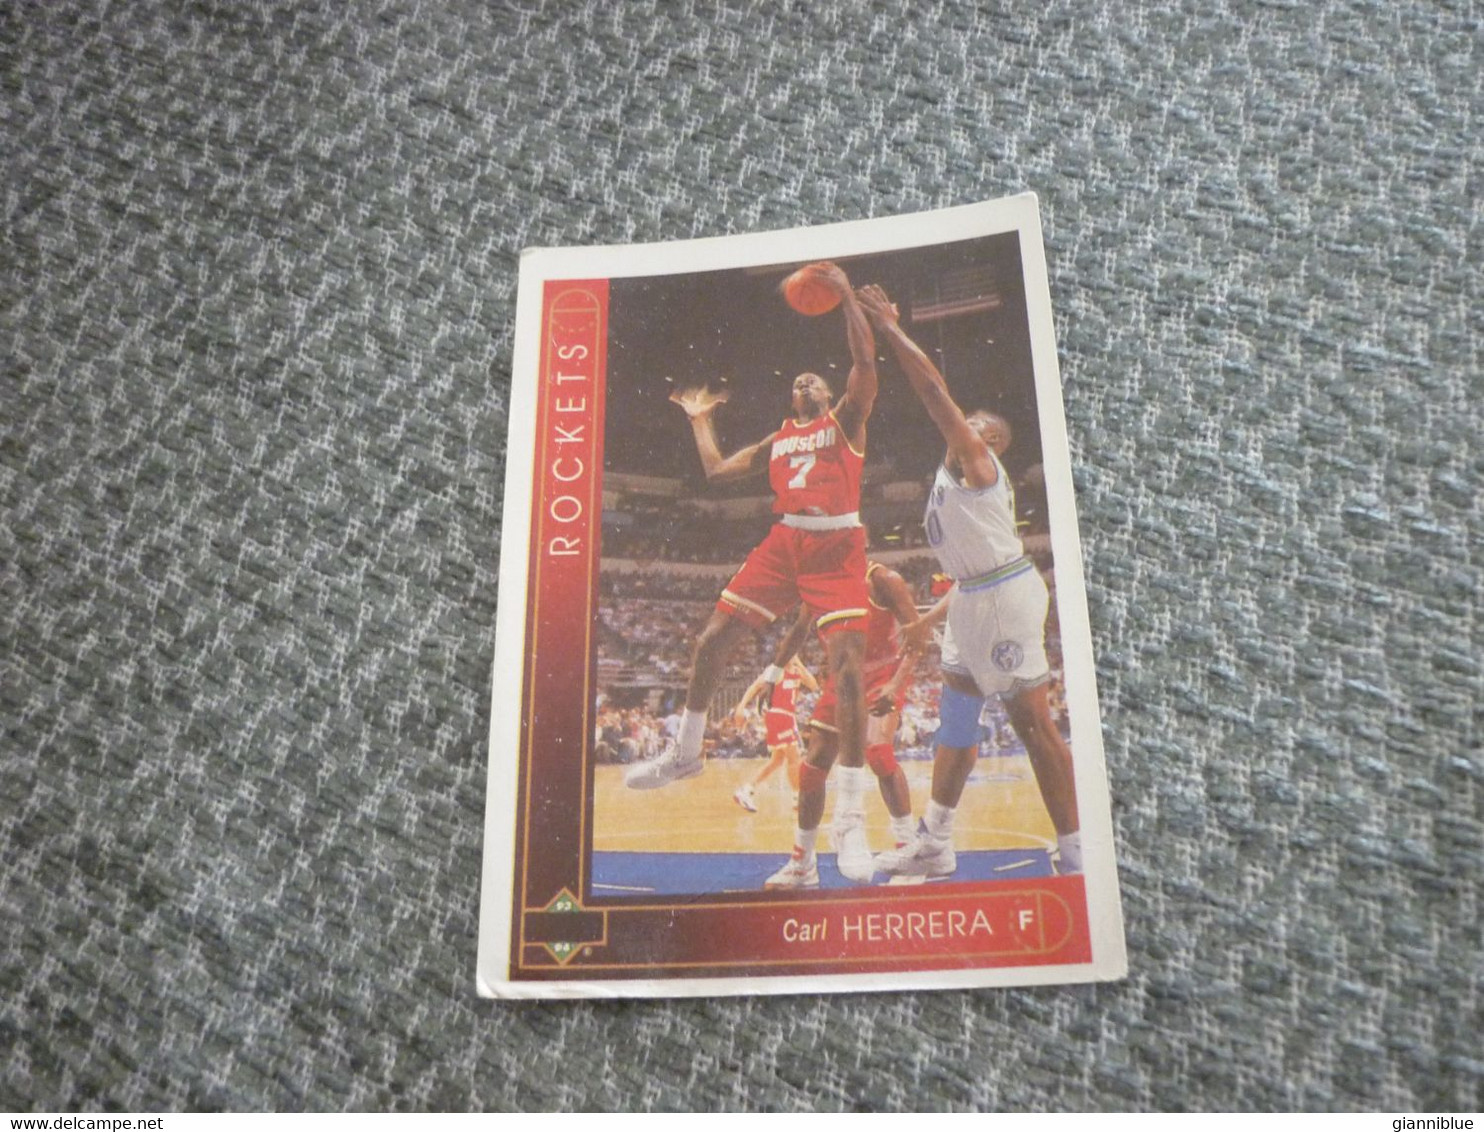 Carl Herrera Houston Rockets Basket Basketball '90s Rare Greek Edition Card - 1990-1999